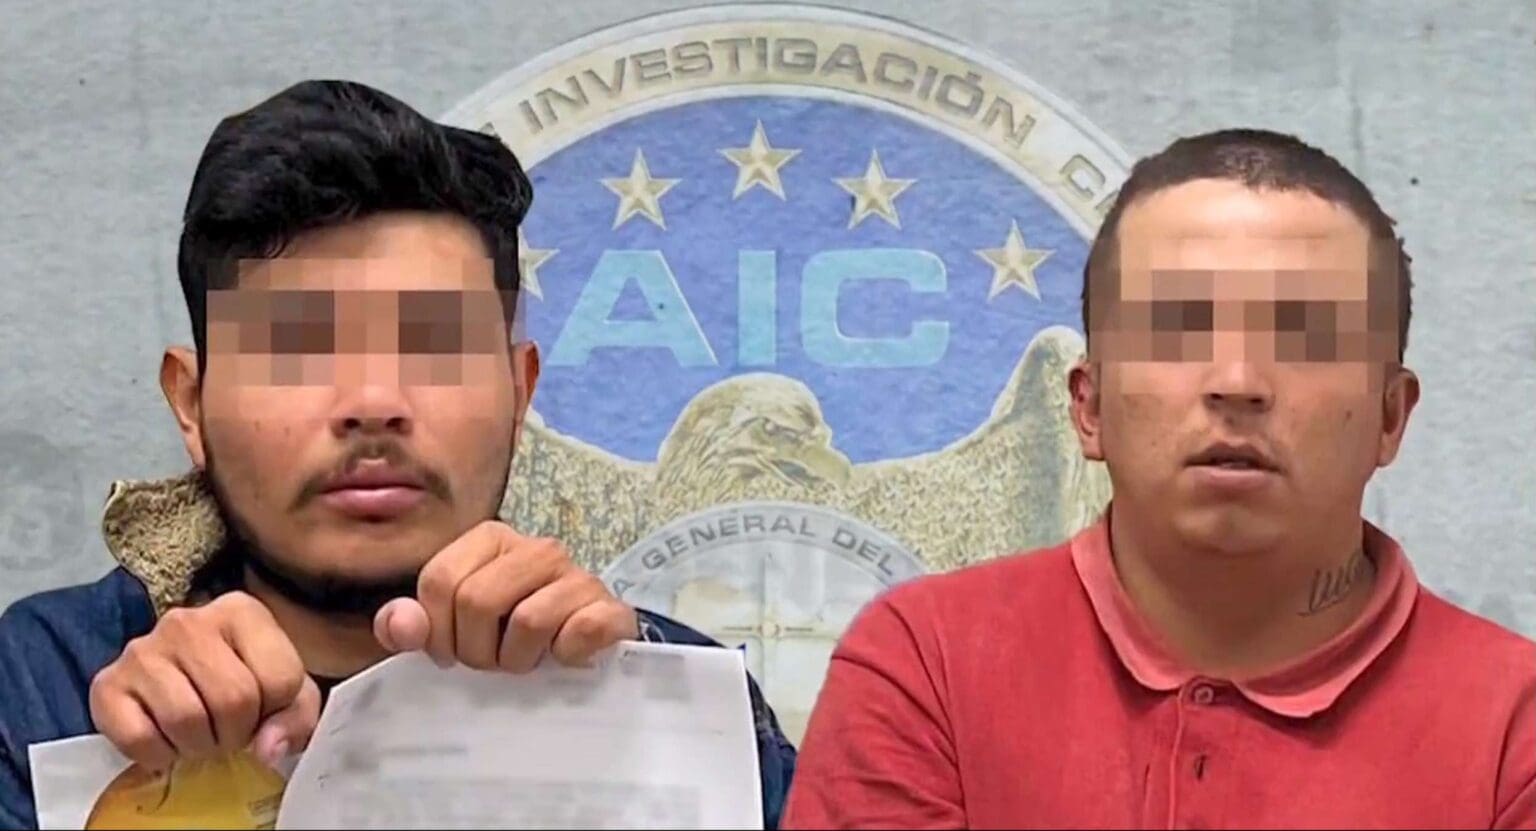 Caen hombres ligados a desaparición de madre buscadora en Guanajuato